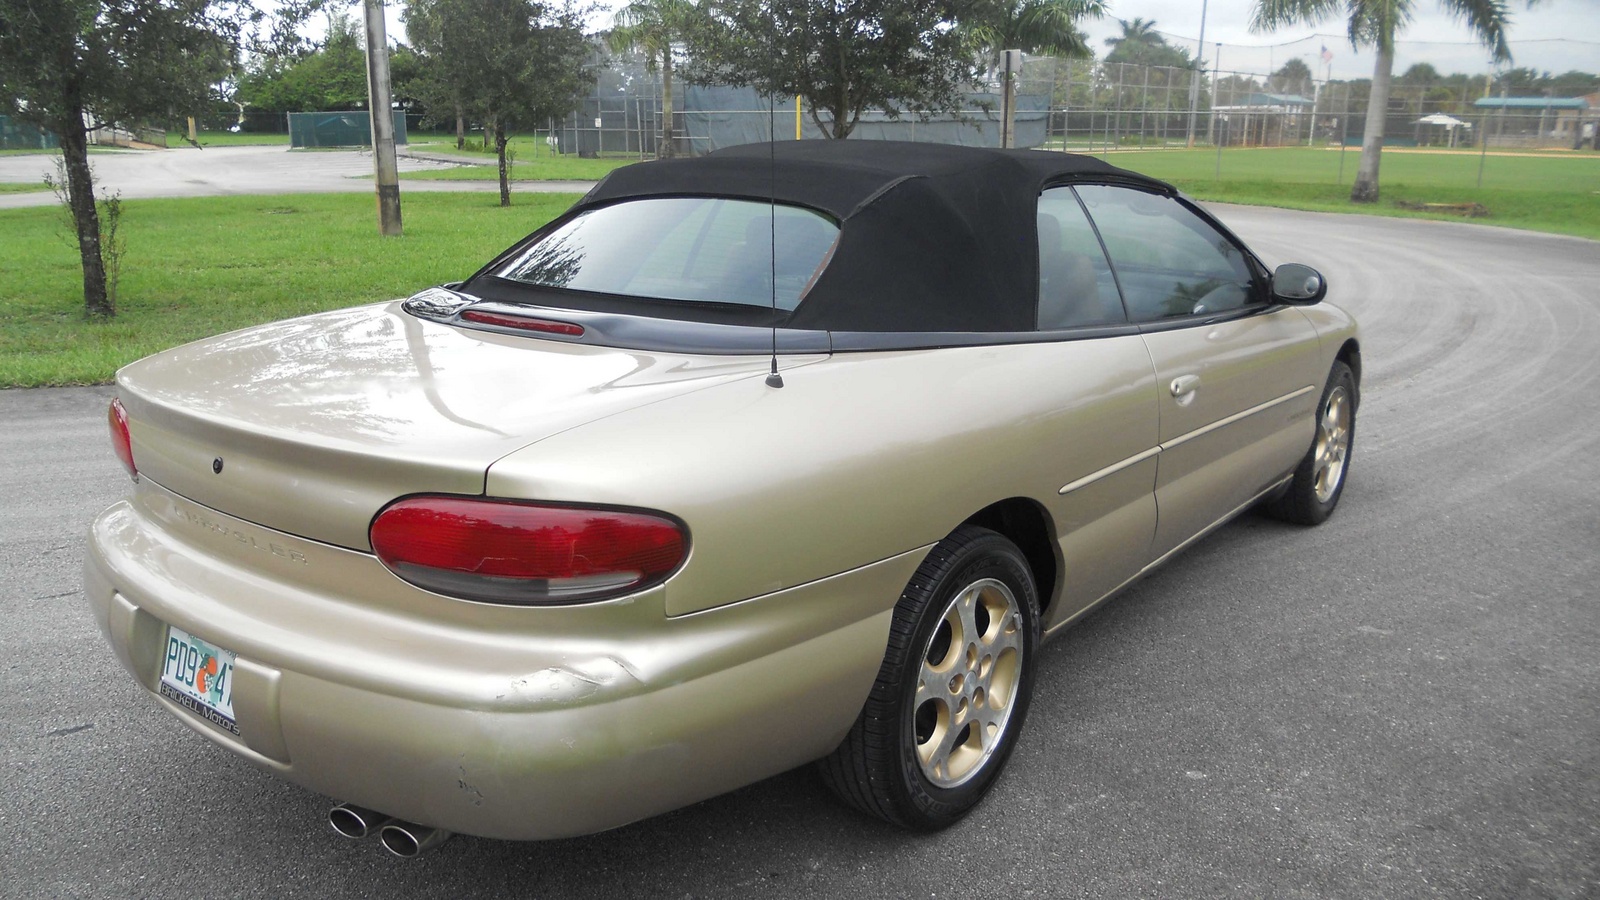 1998 Chrysler sebring convertible seat covers